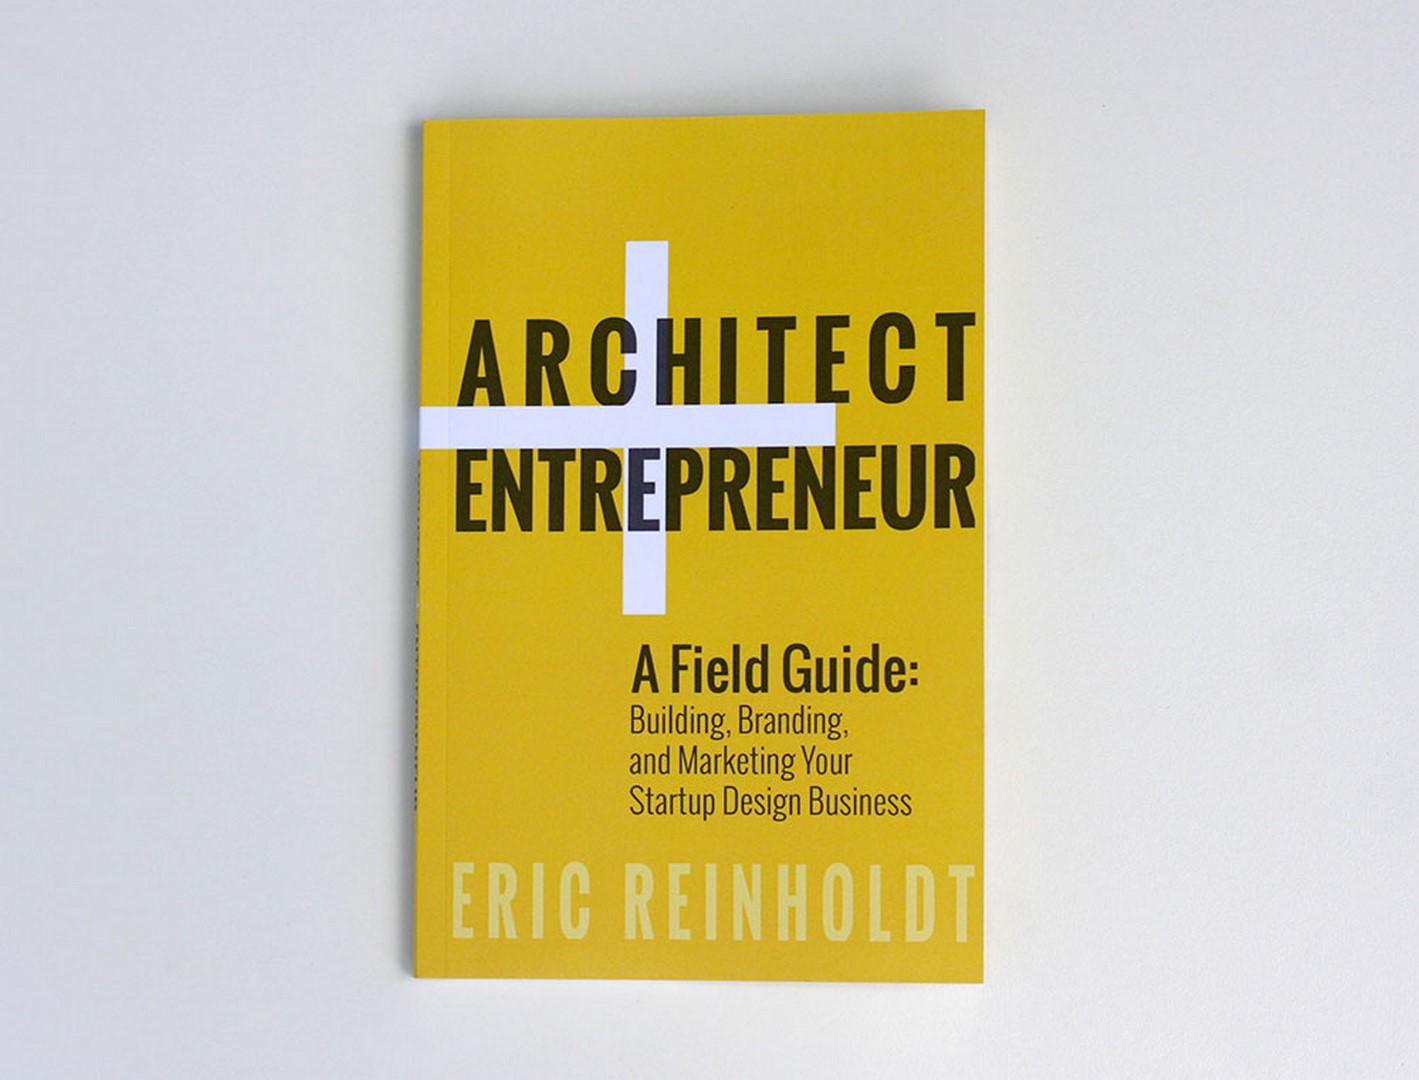 Eric Reinholdt: Entrepreneurship and Architecture - Sheet2